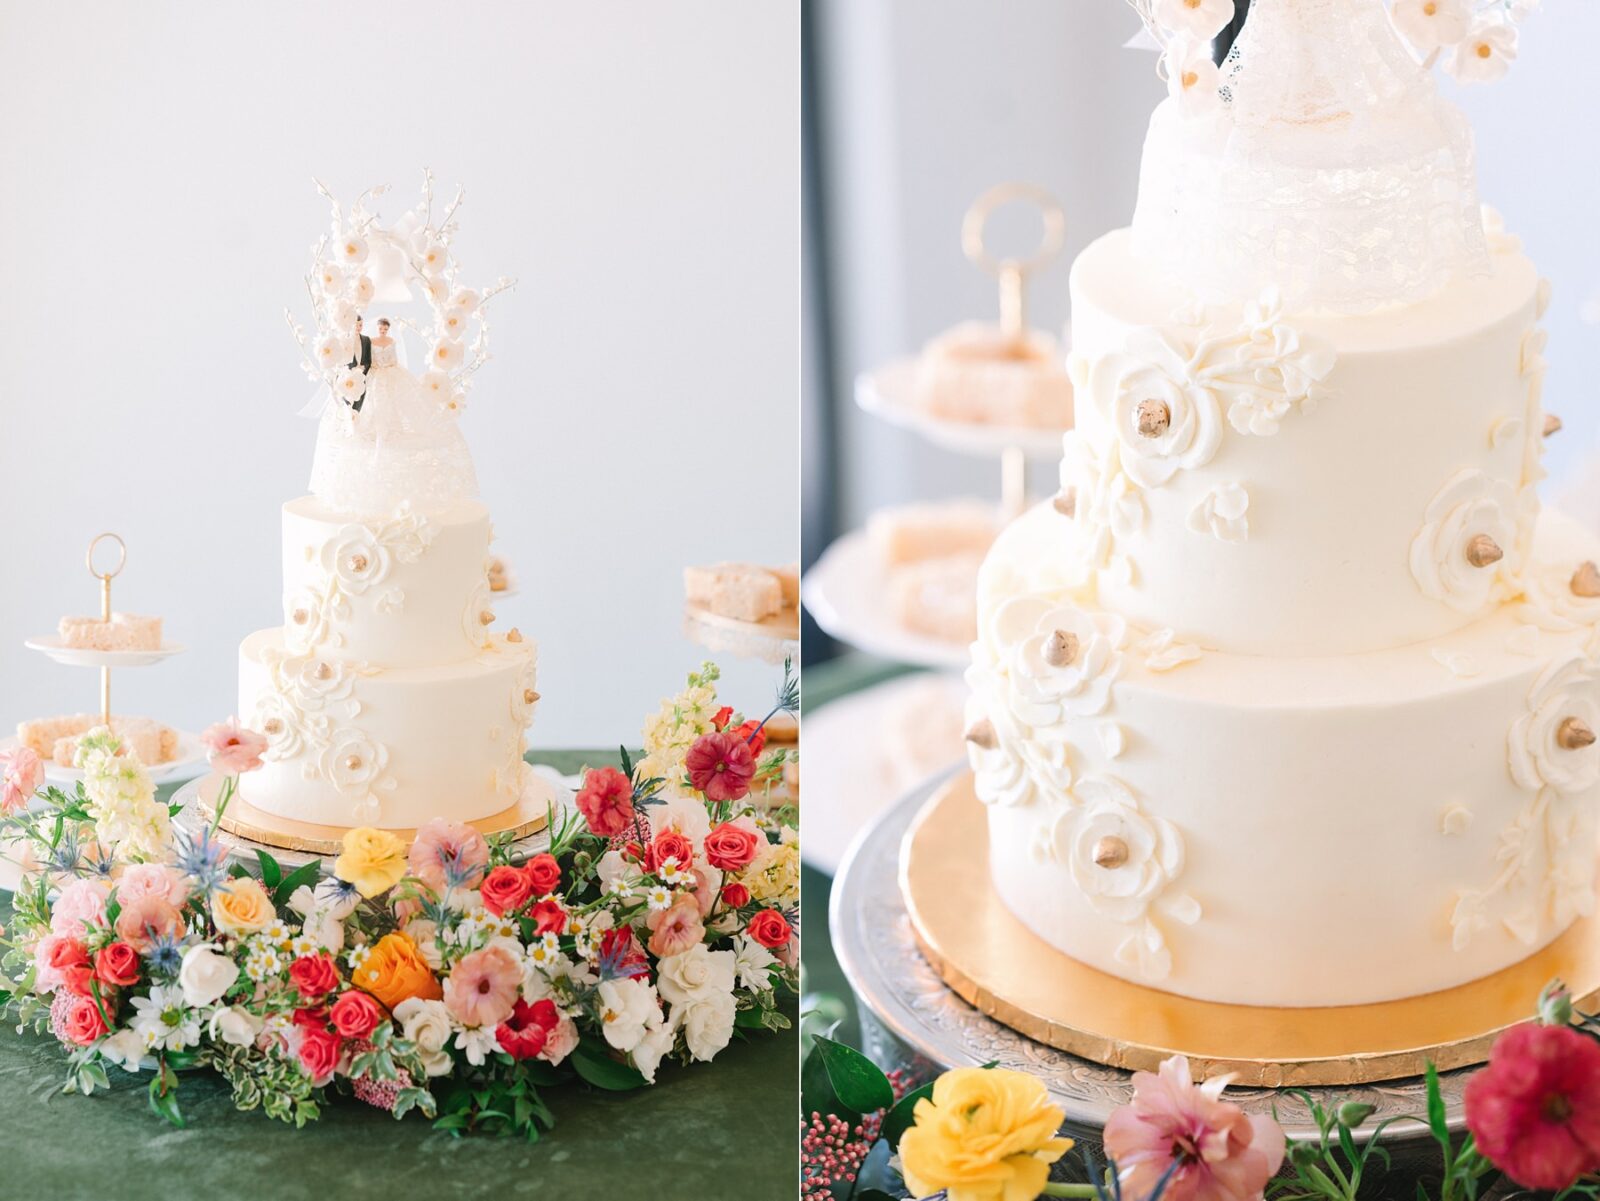 2tarts bakery, 2tarts wedding cake, simple floral wedding cake, perry's petals, 